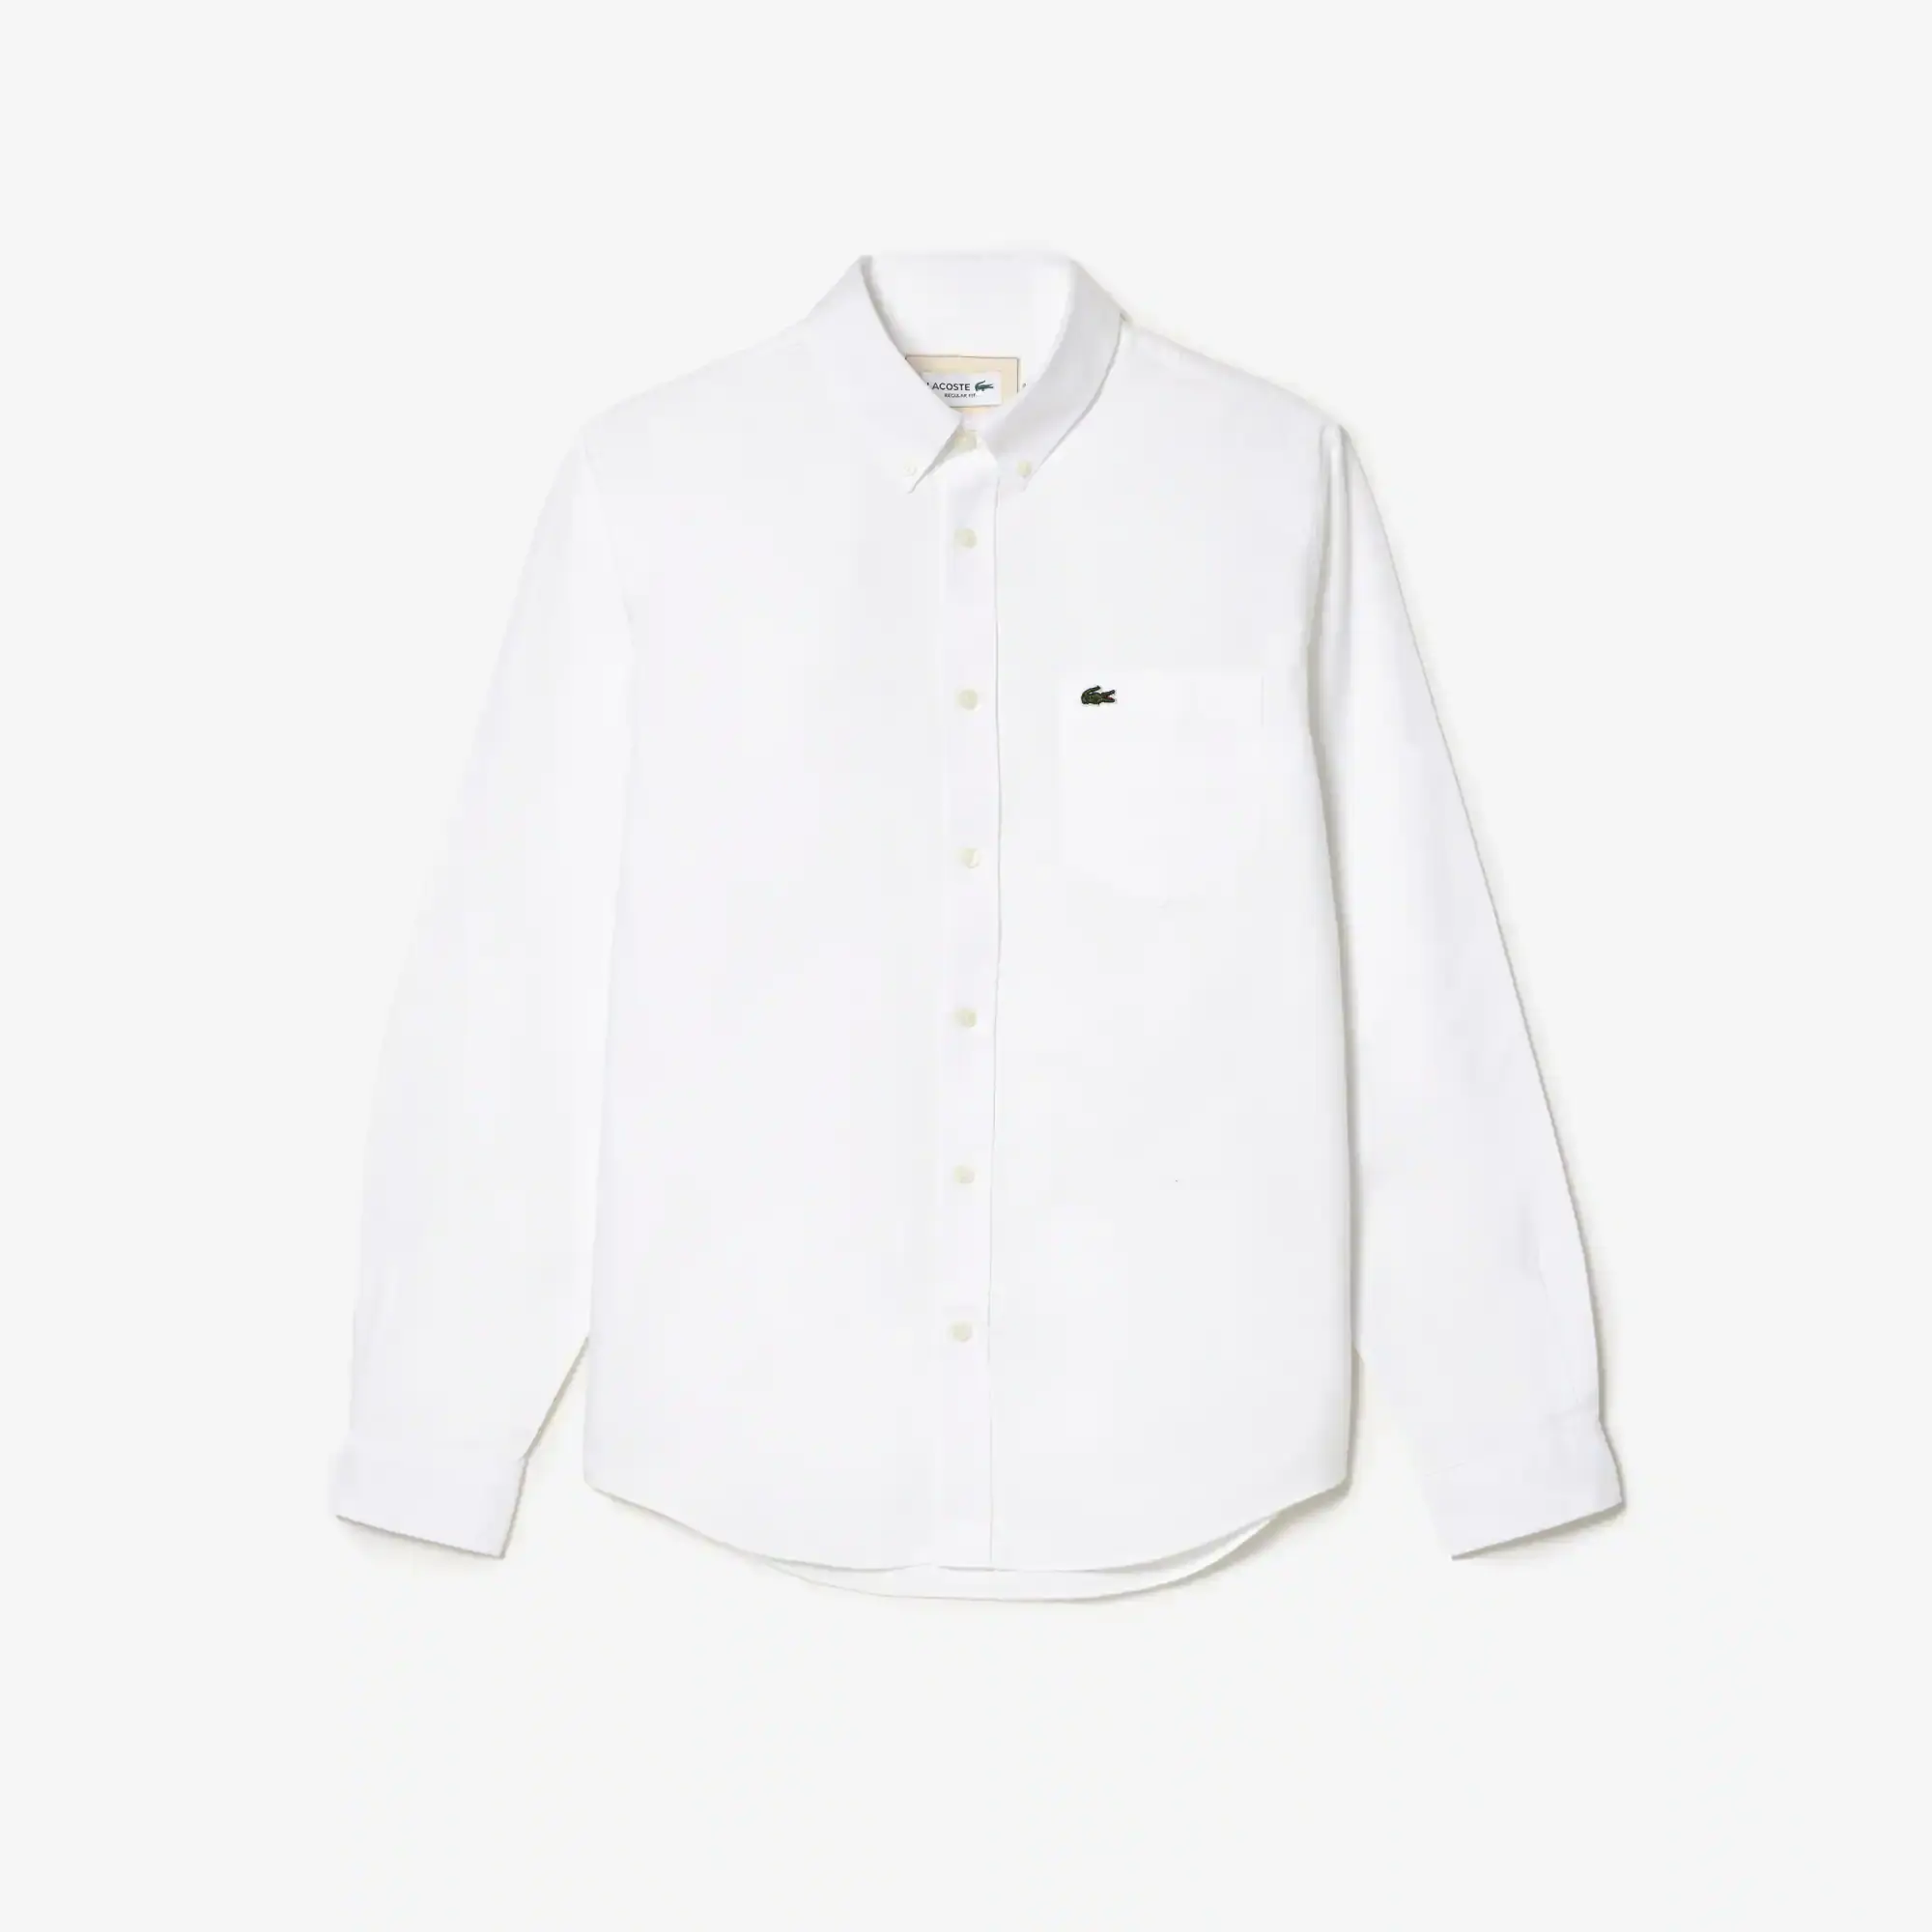 Lacoste Men’s Buttoned Collar Oxford Cotton Shirt. 2